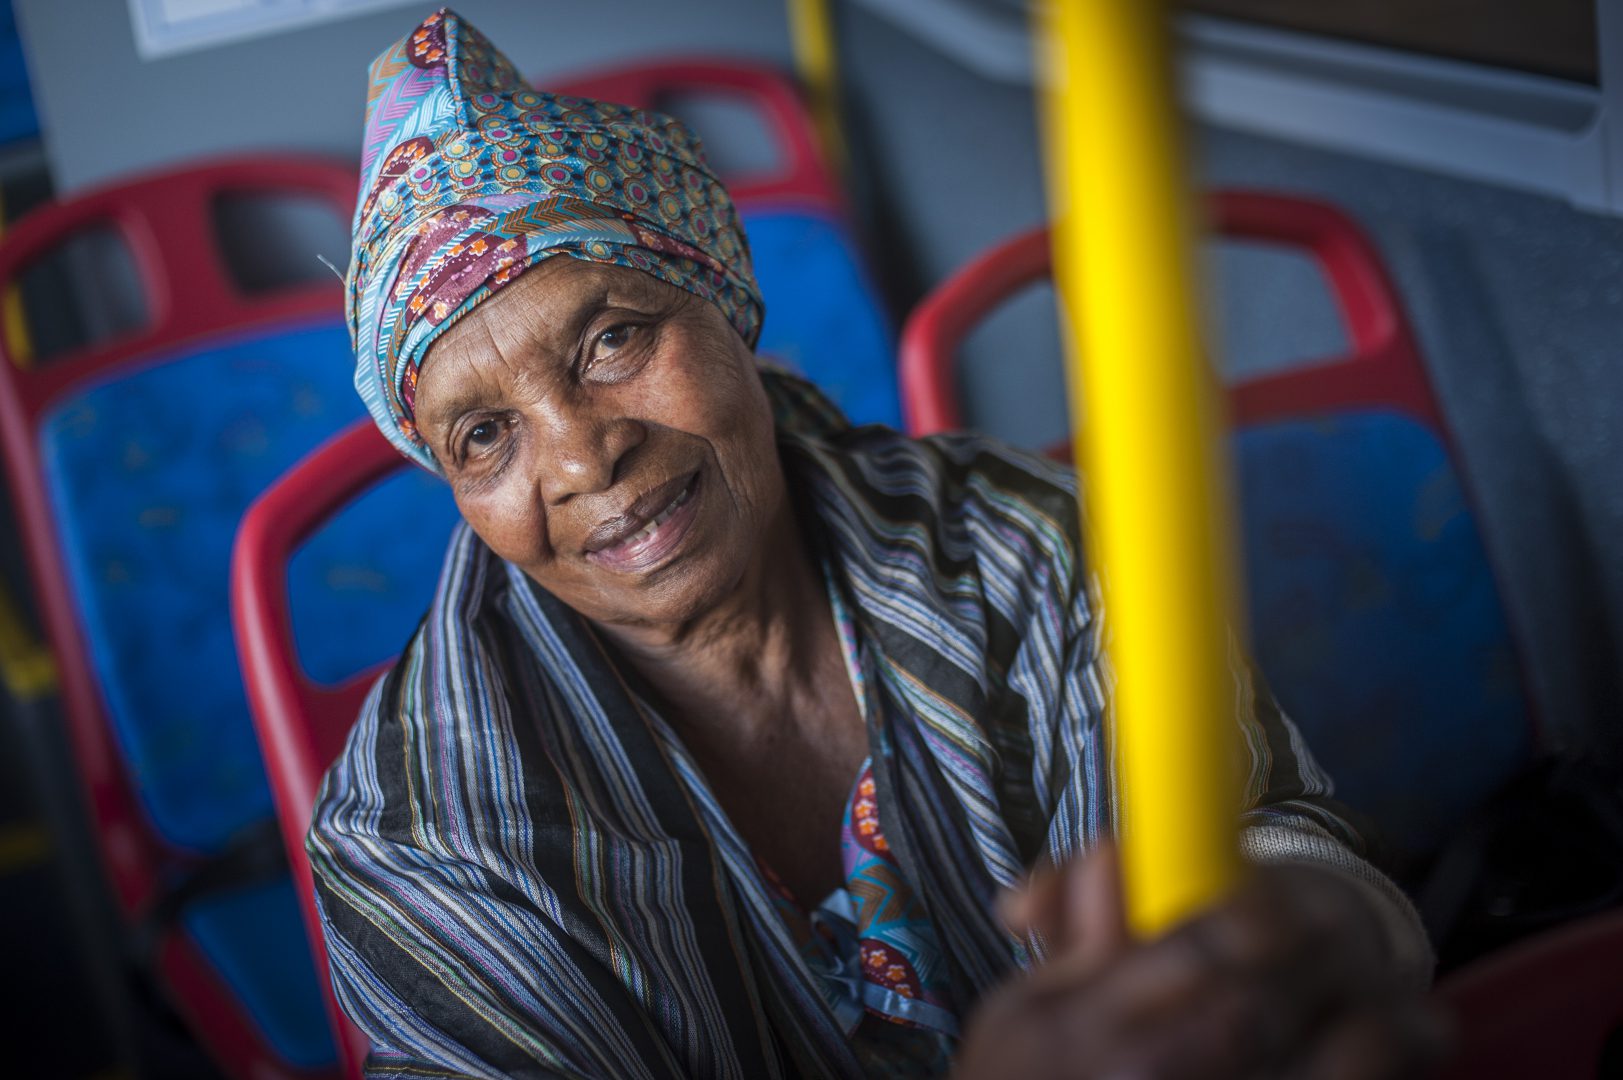 Elderly woman sitting in bus seat